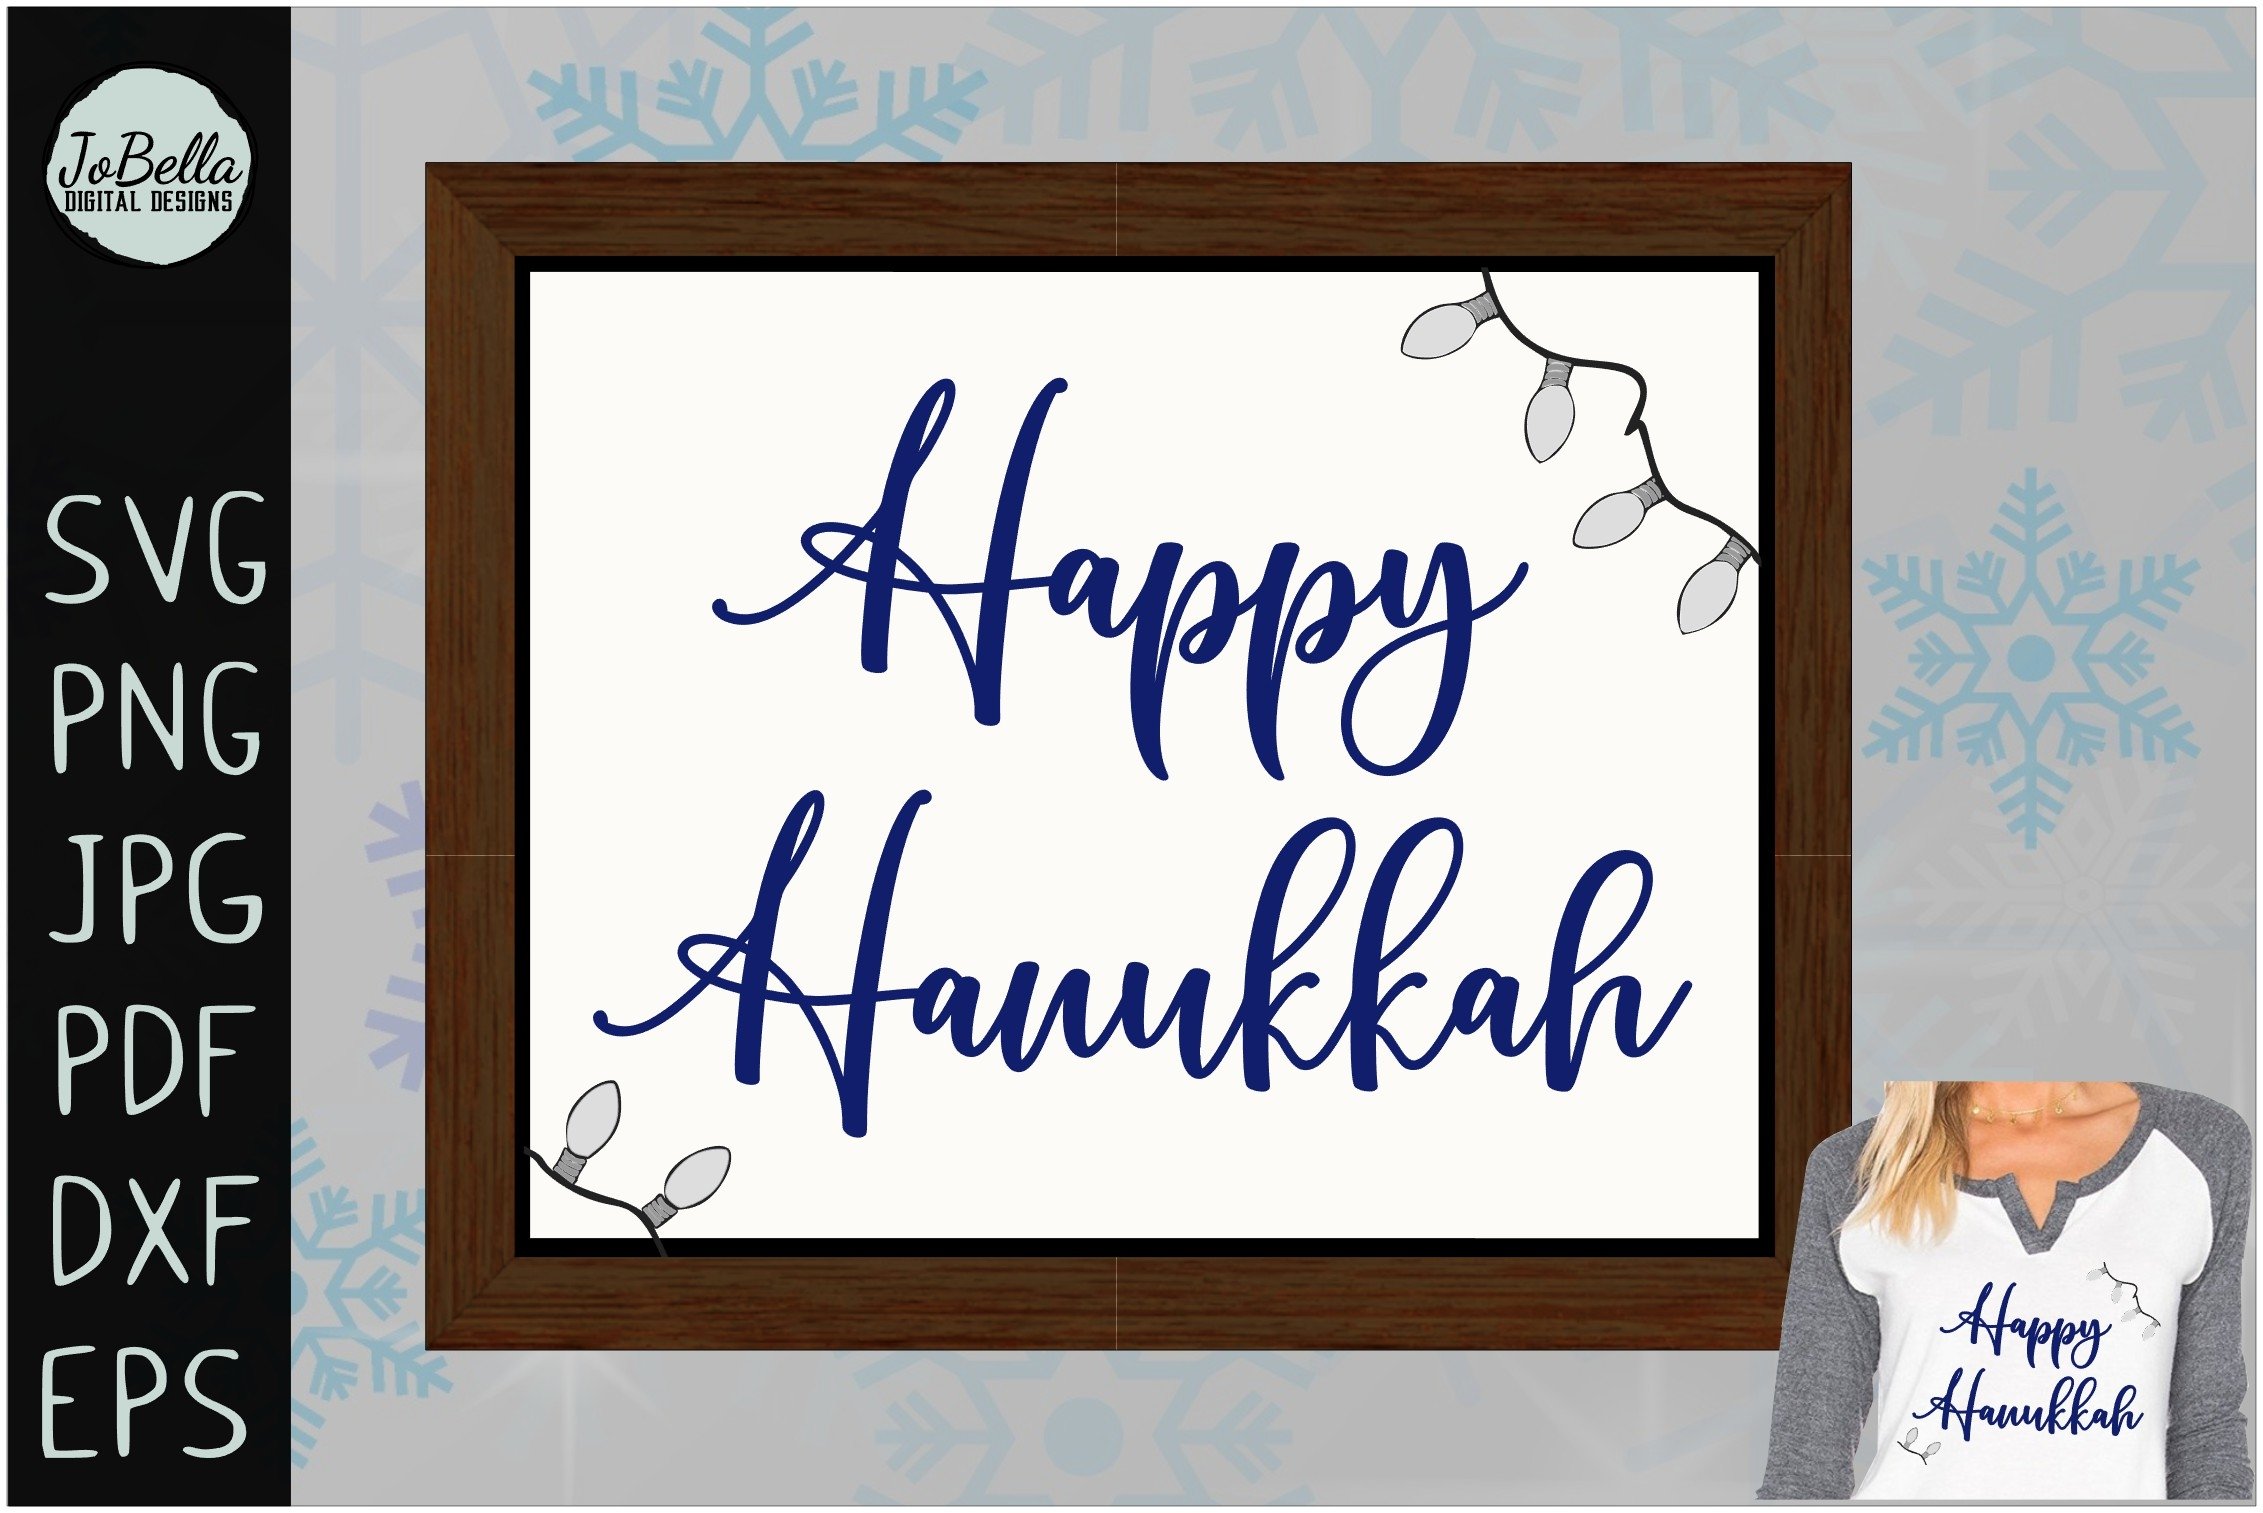 The blue lettering "Happy Hanukkah".